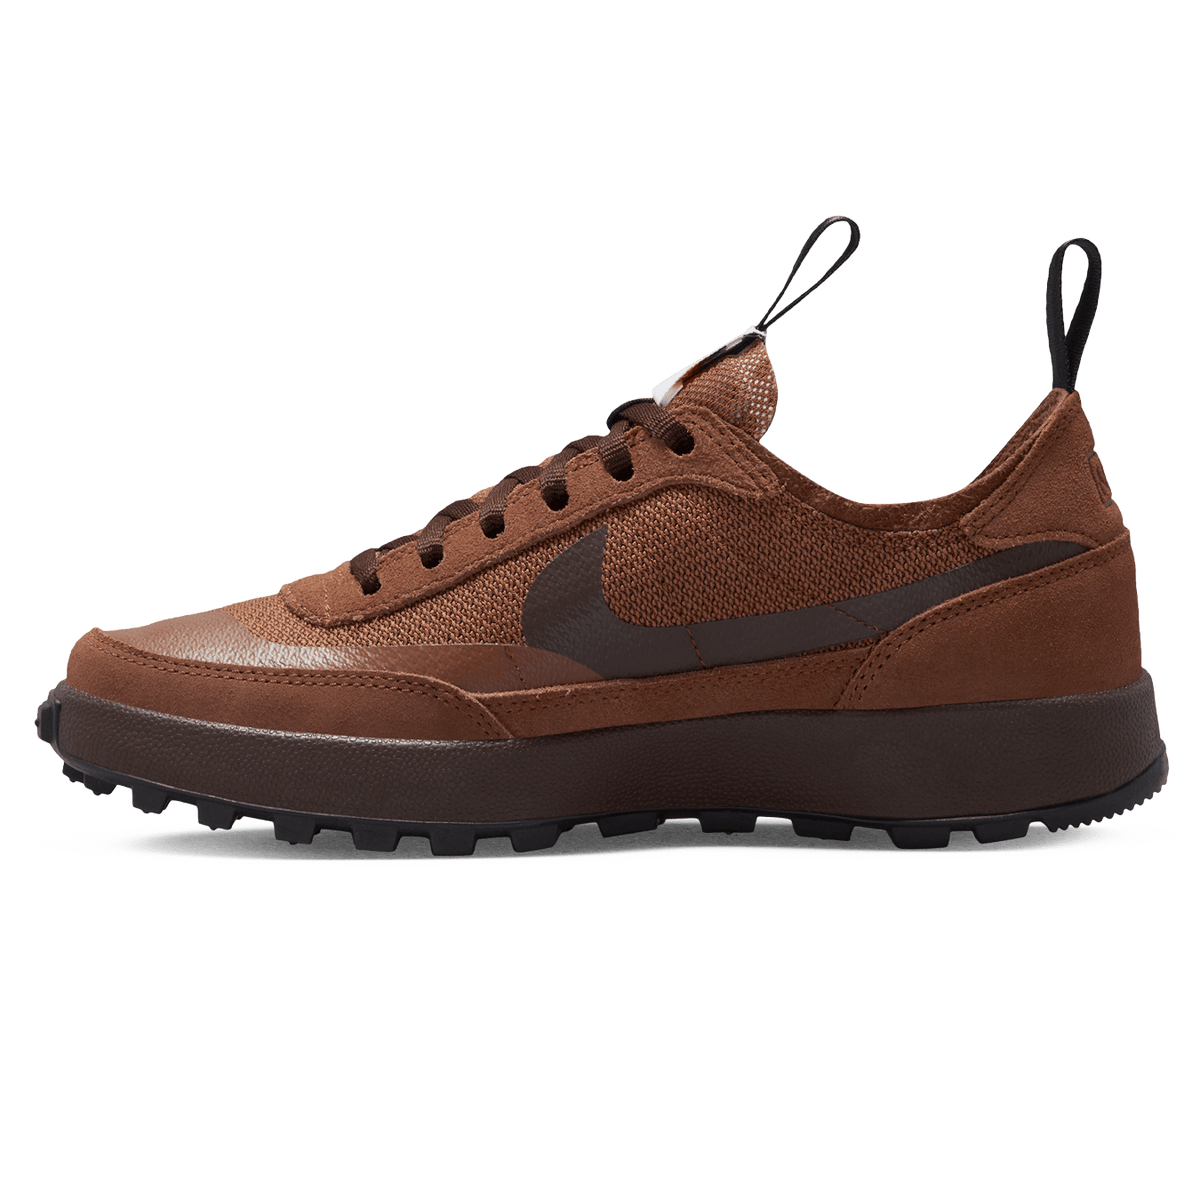 nikecraft general purpose shoe tom sachs brown DA6672 201 1